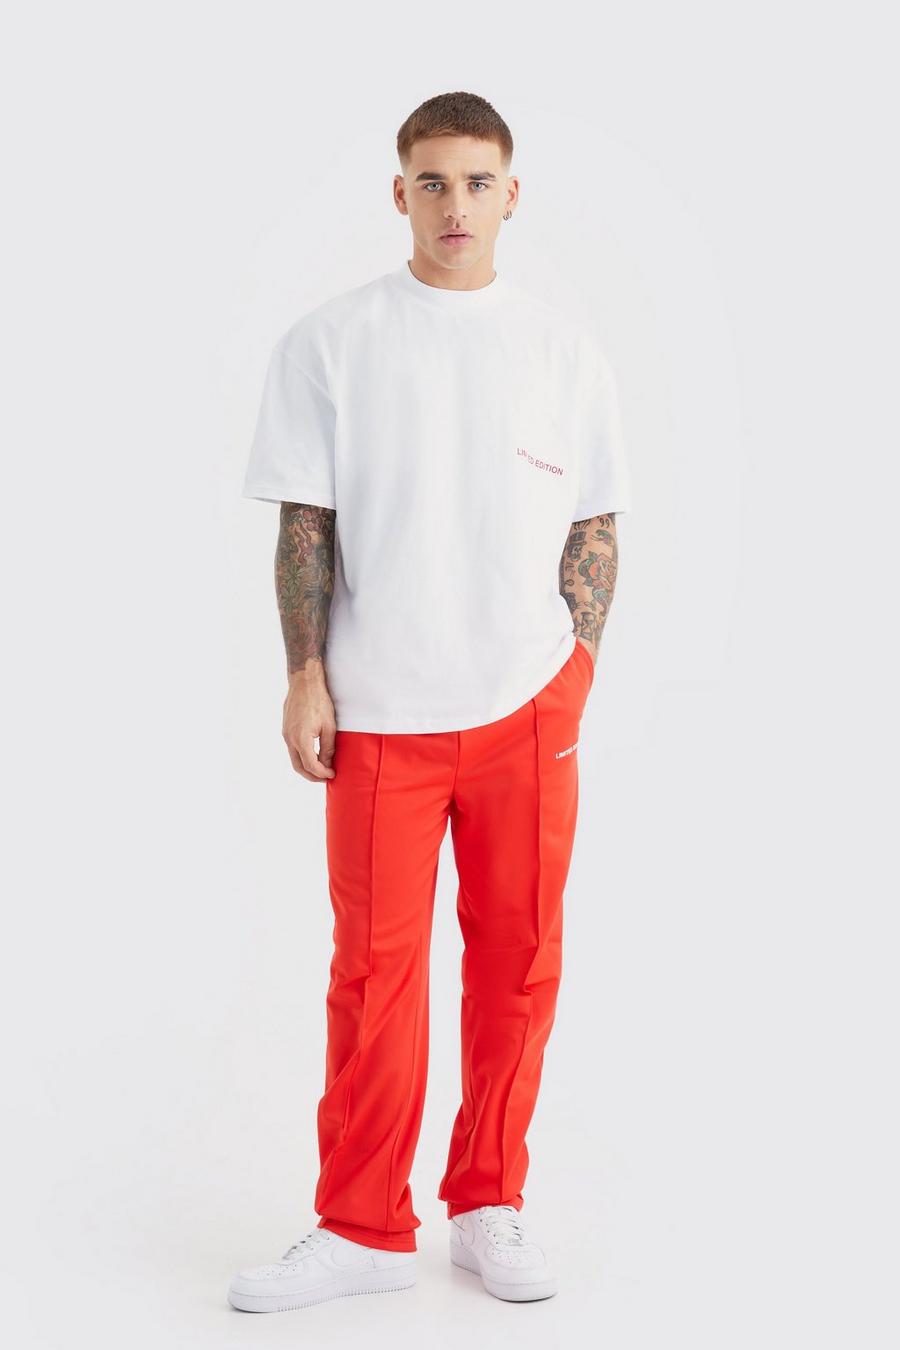 Ensemble oversize avec t-shirt et jogging - Limited Edition, Red image number 1